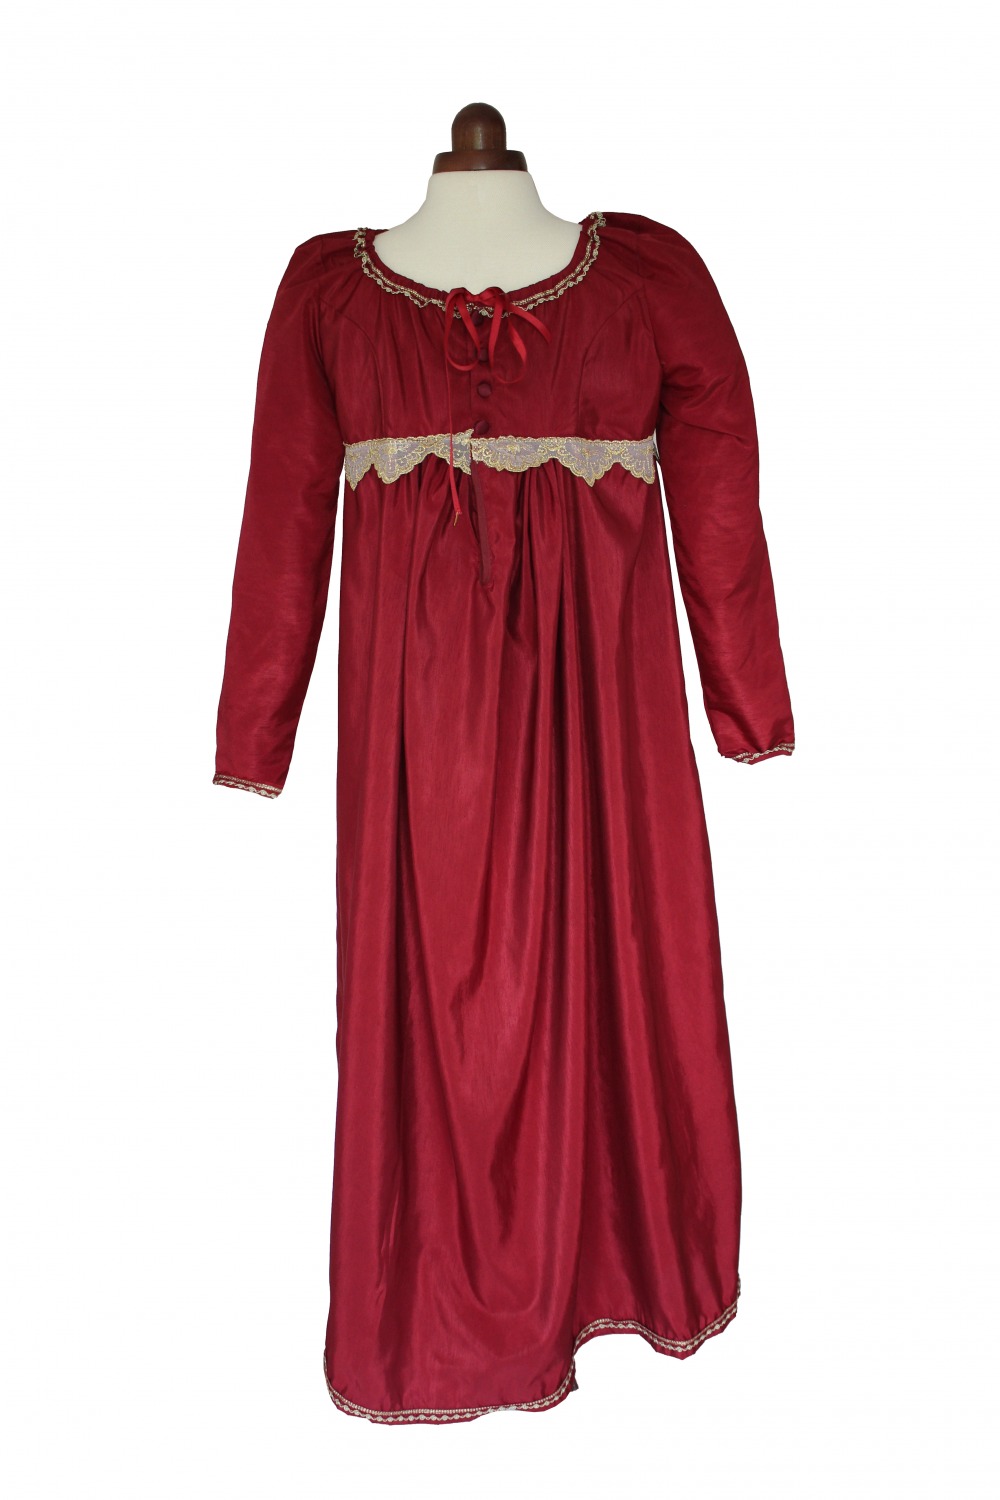 Ladies 18th 19th Century Regency Jane Austen Costume Evening Gown Size 14 - 16 Image